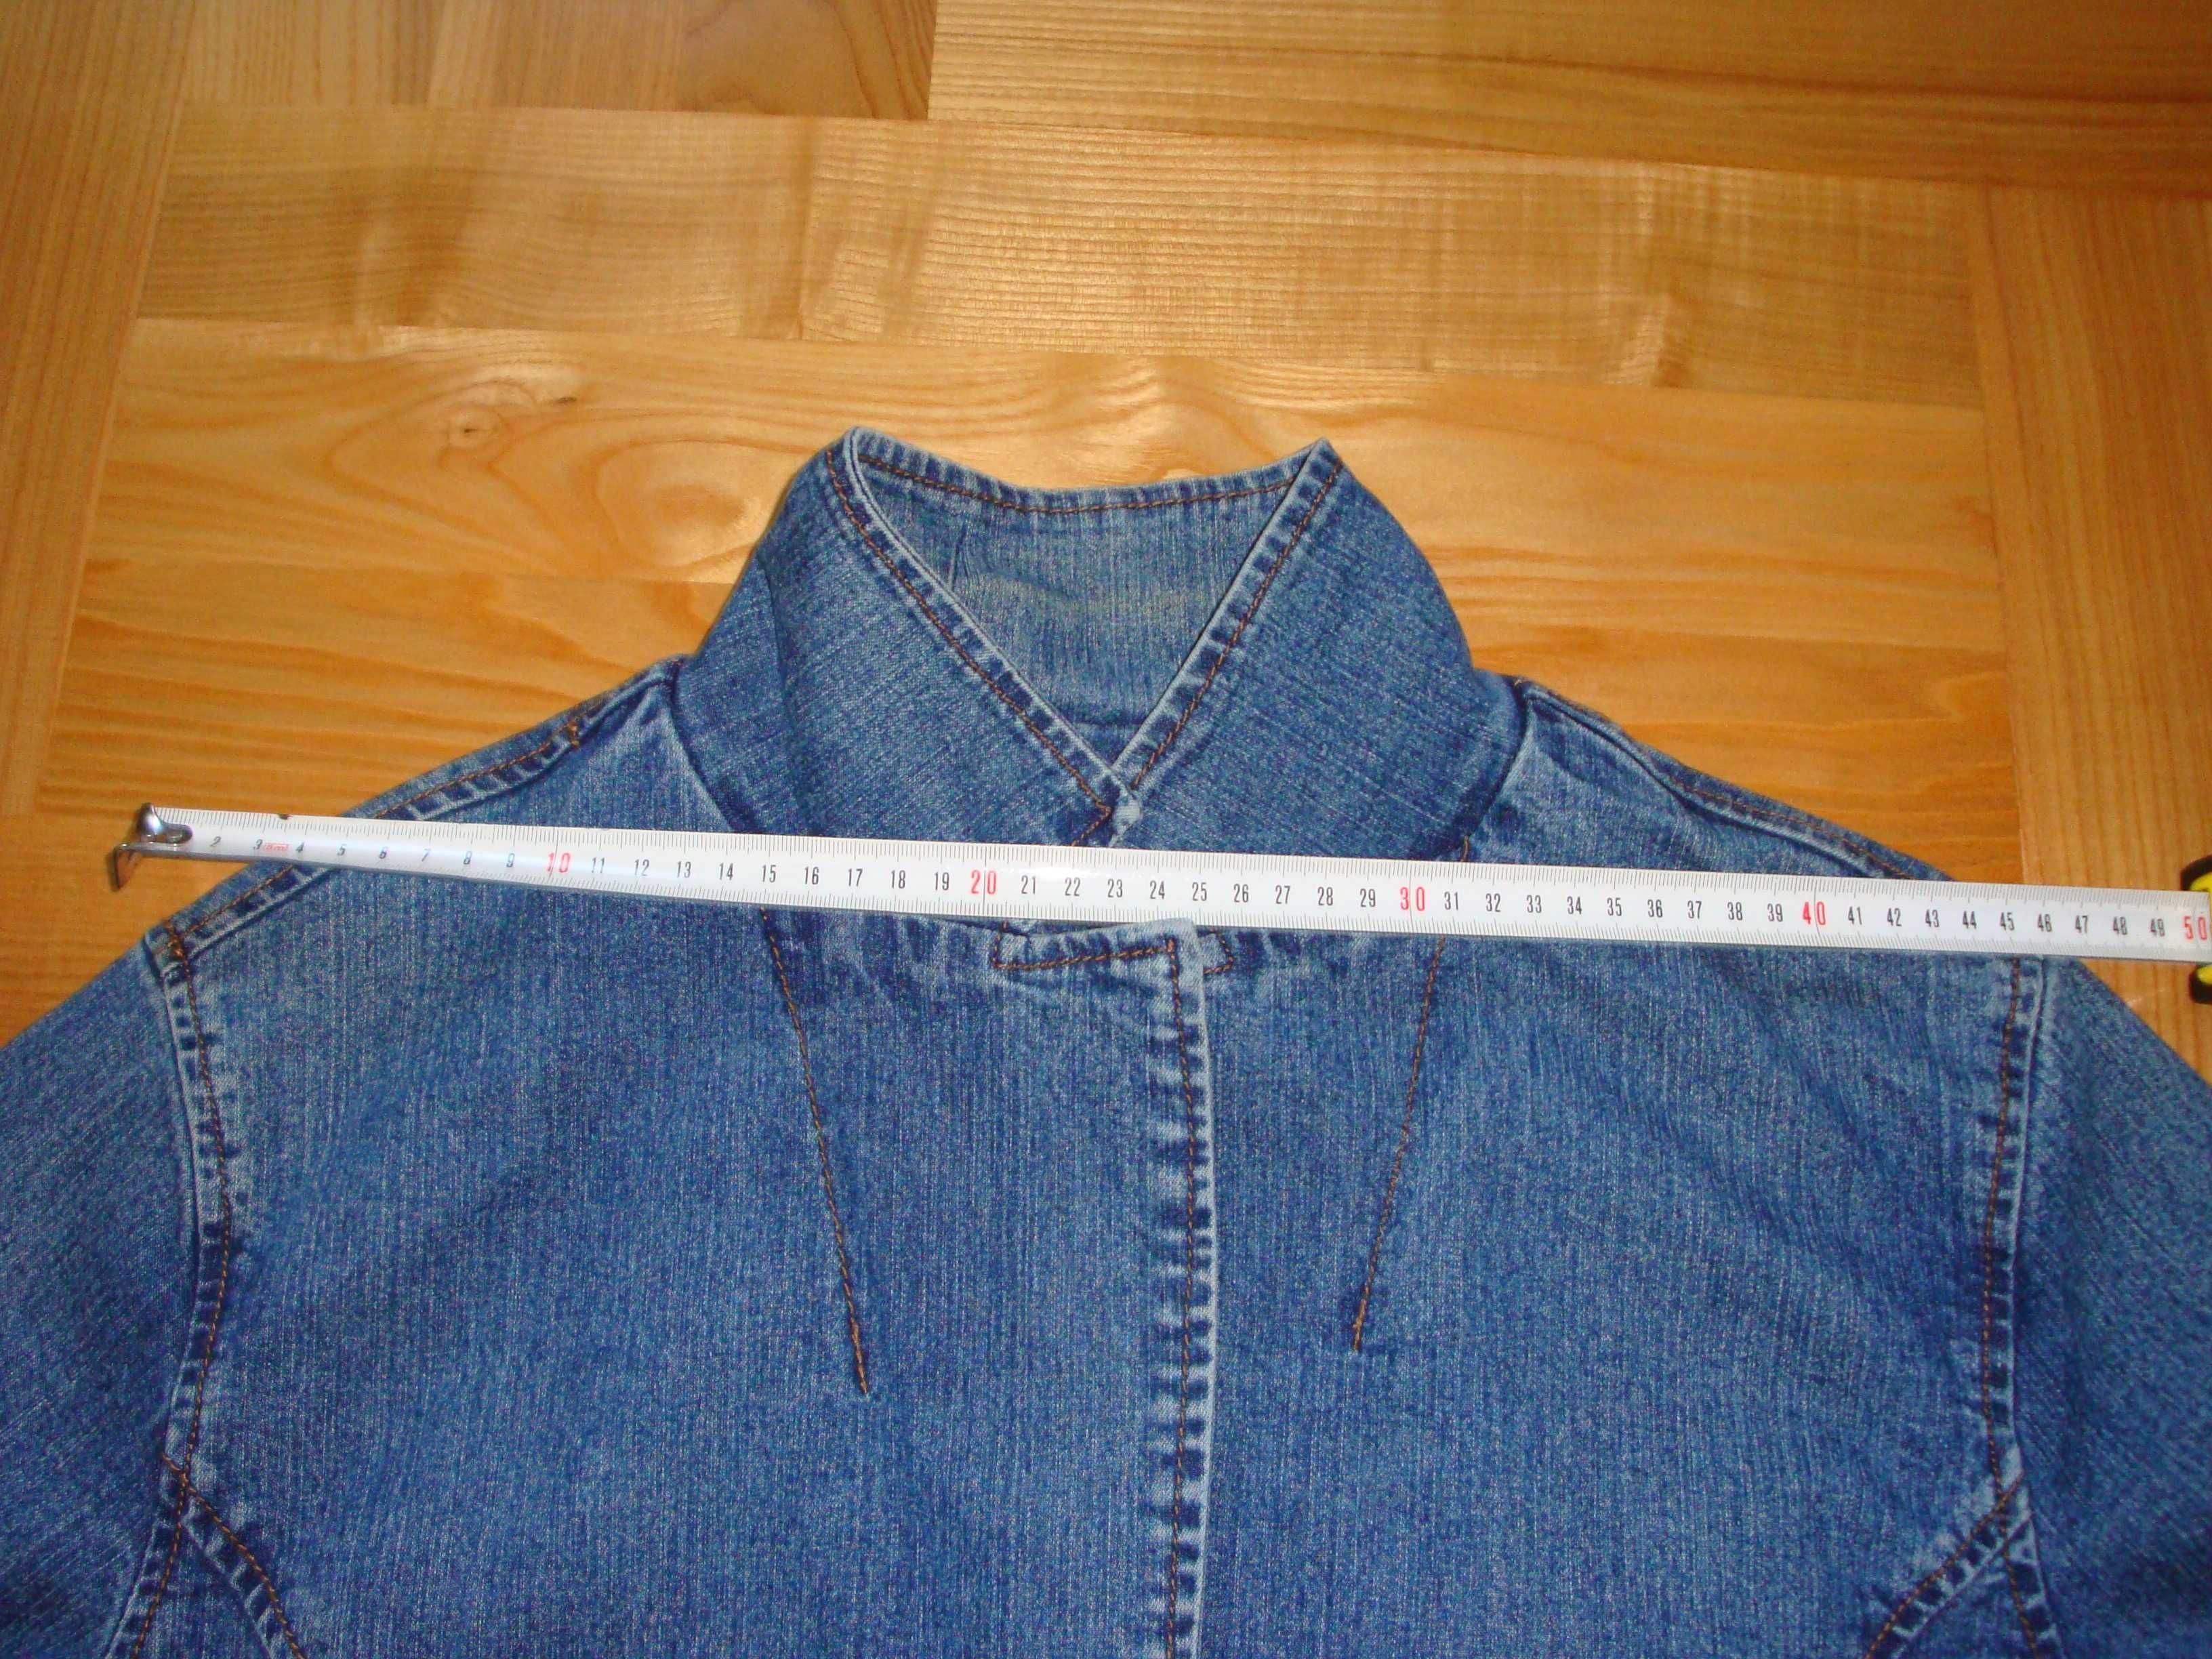 kurtka jeans/ żakiet jeans